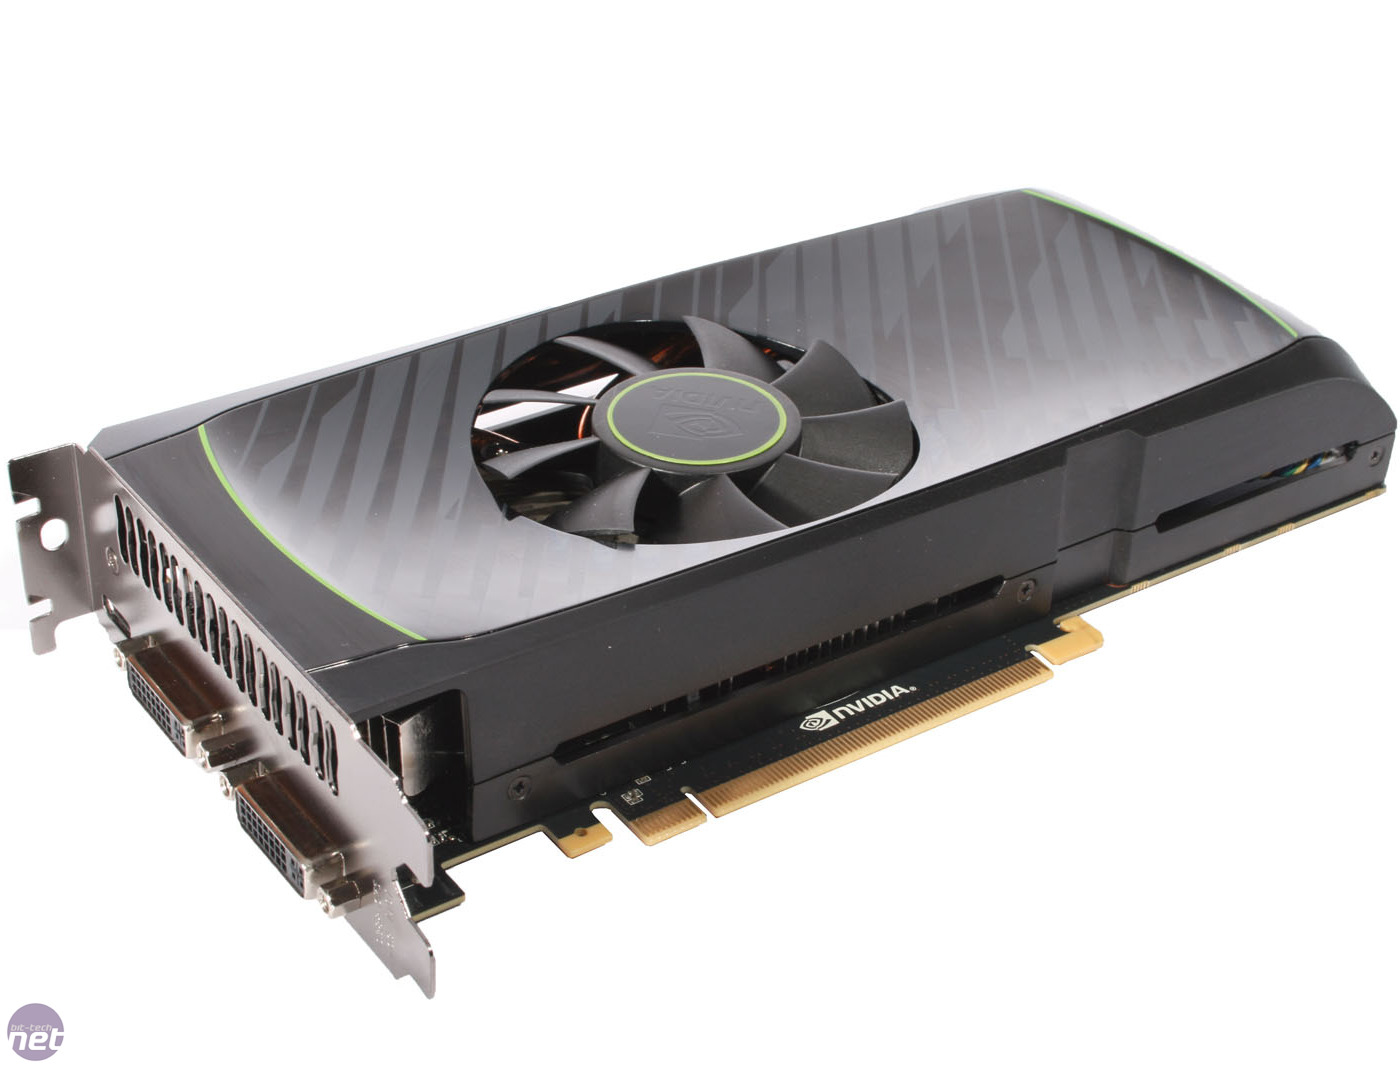 Nvidia GeForce GTX 560 Ti 1GB Review 